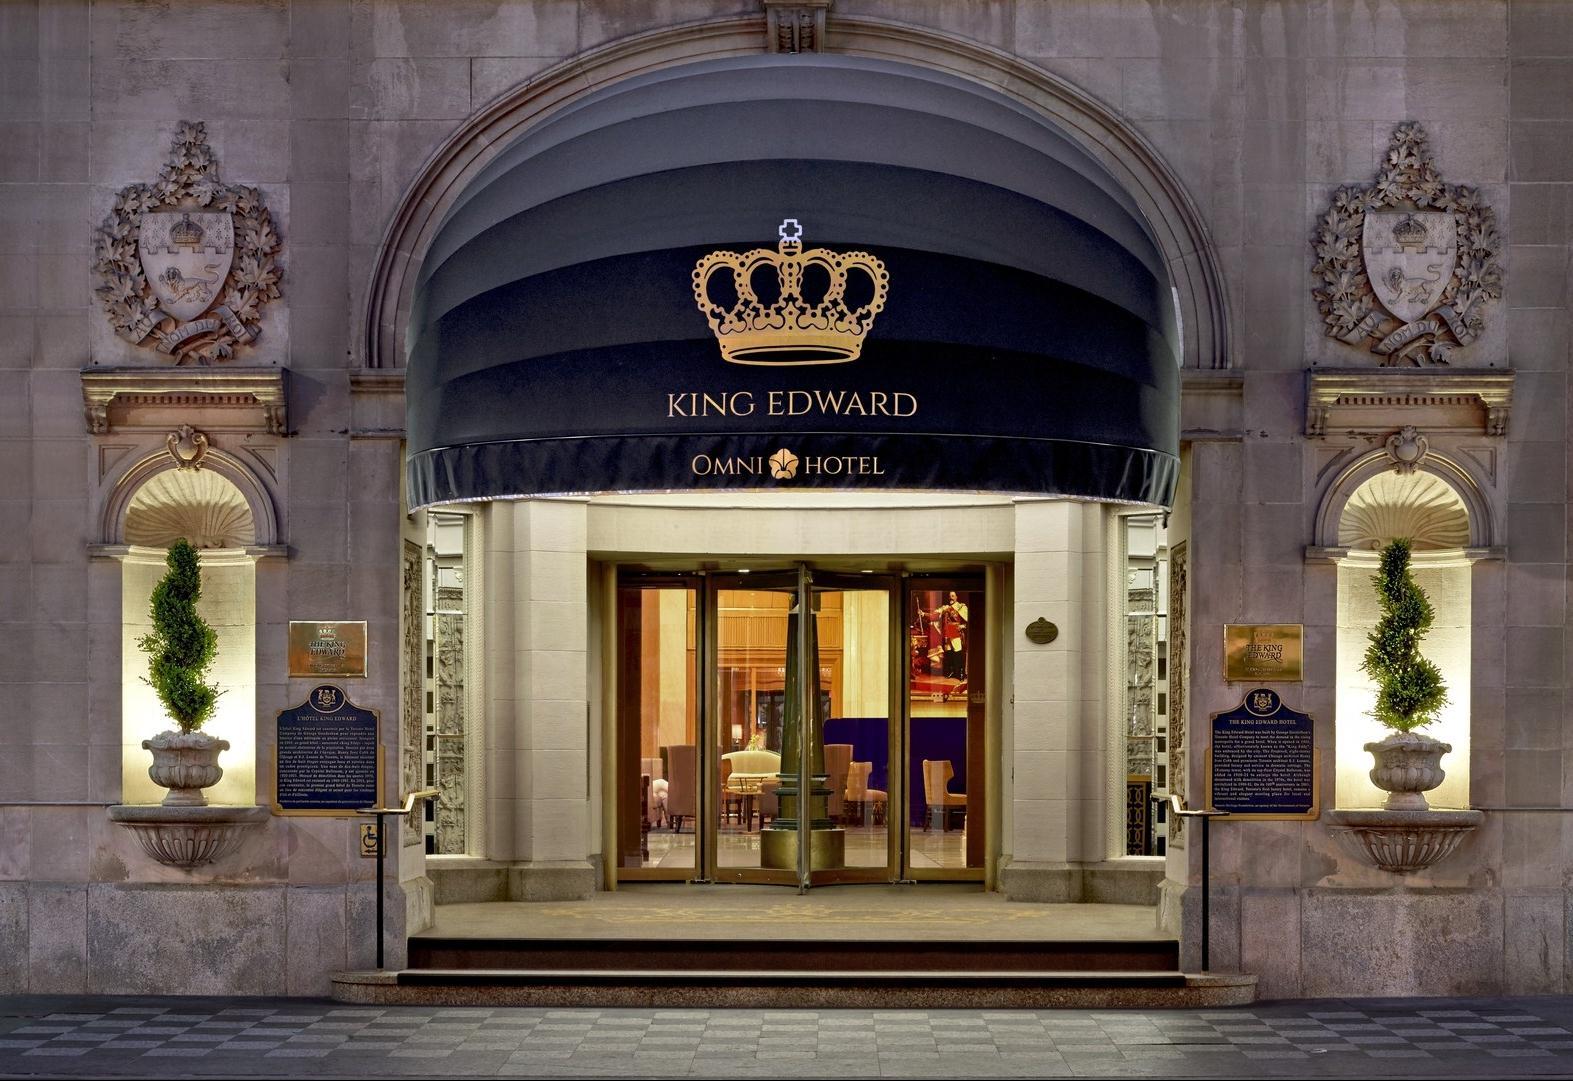 The Omni King Edward Hotel in Toronto, ON